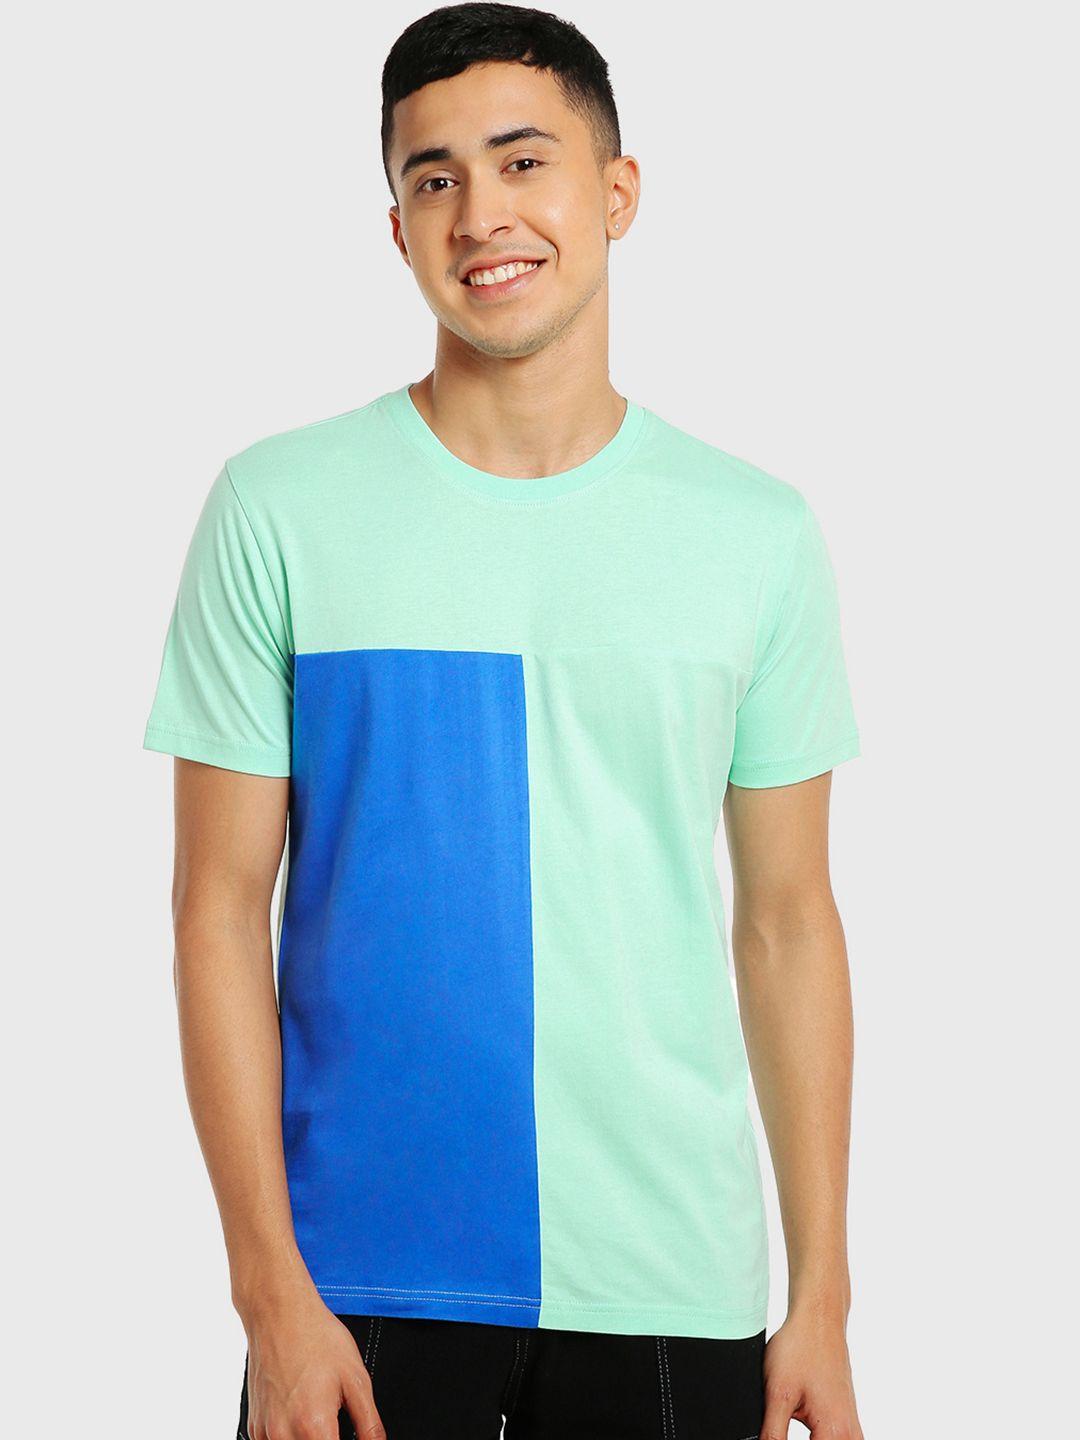 bewakoof-men-colourblocked-t-shirt